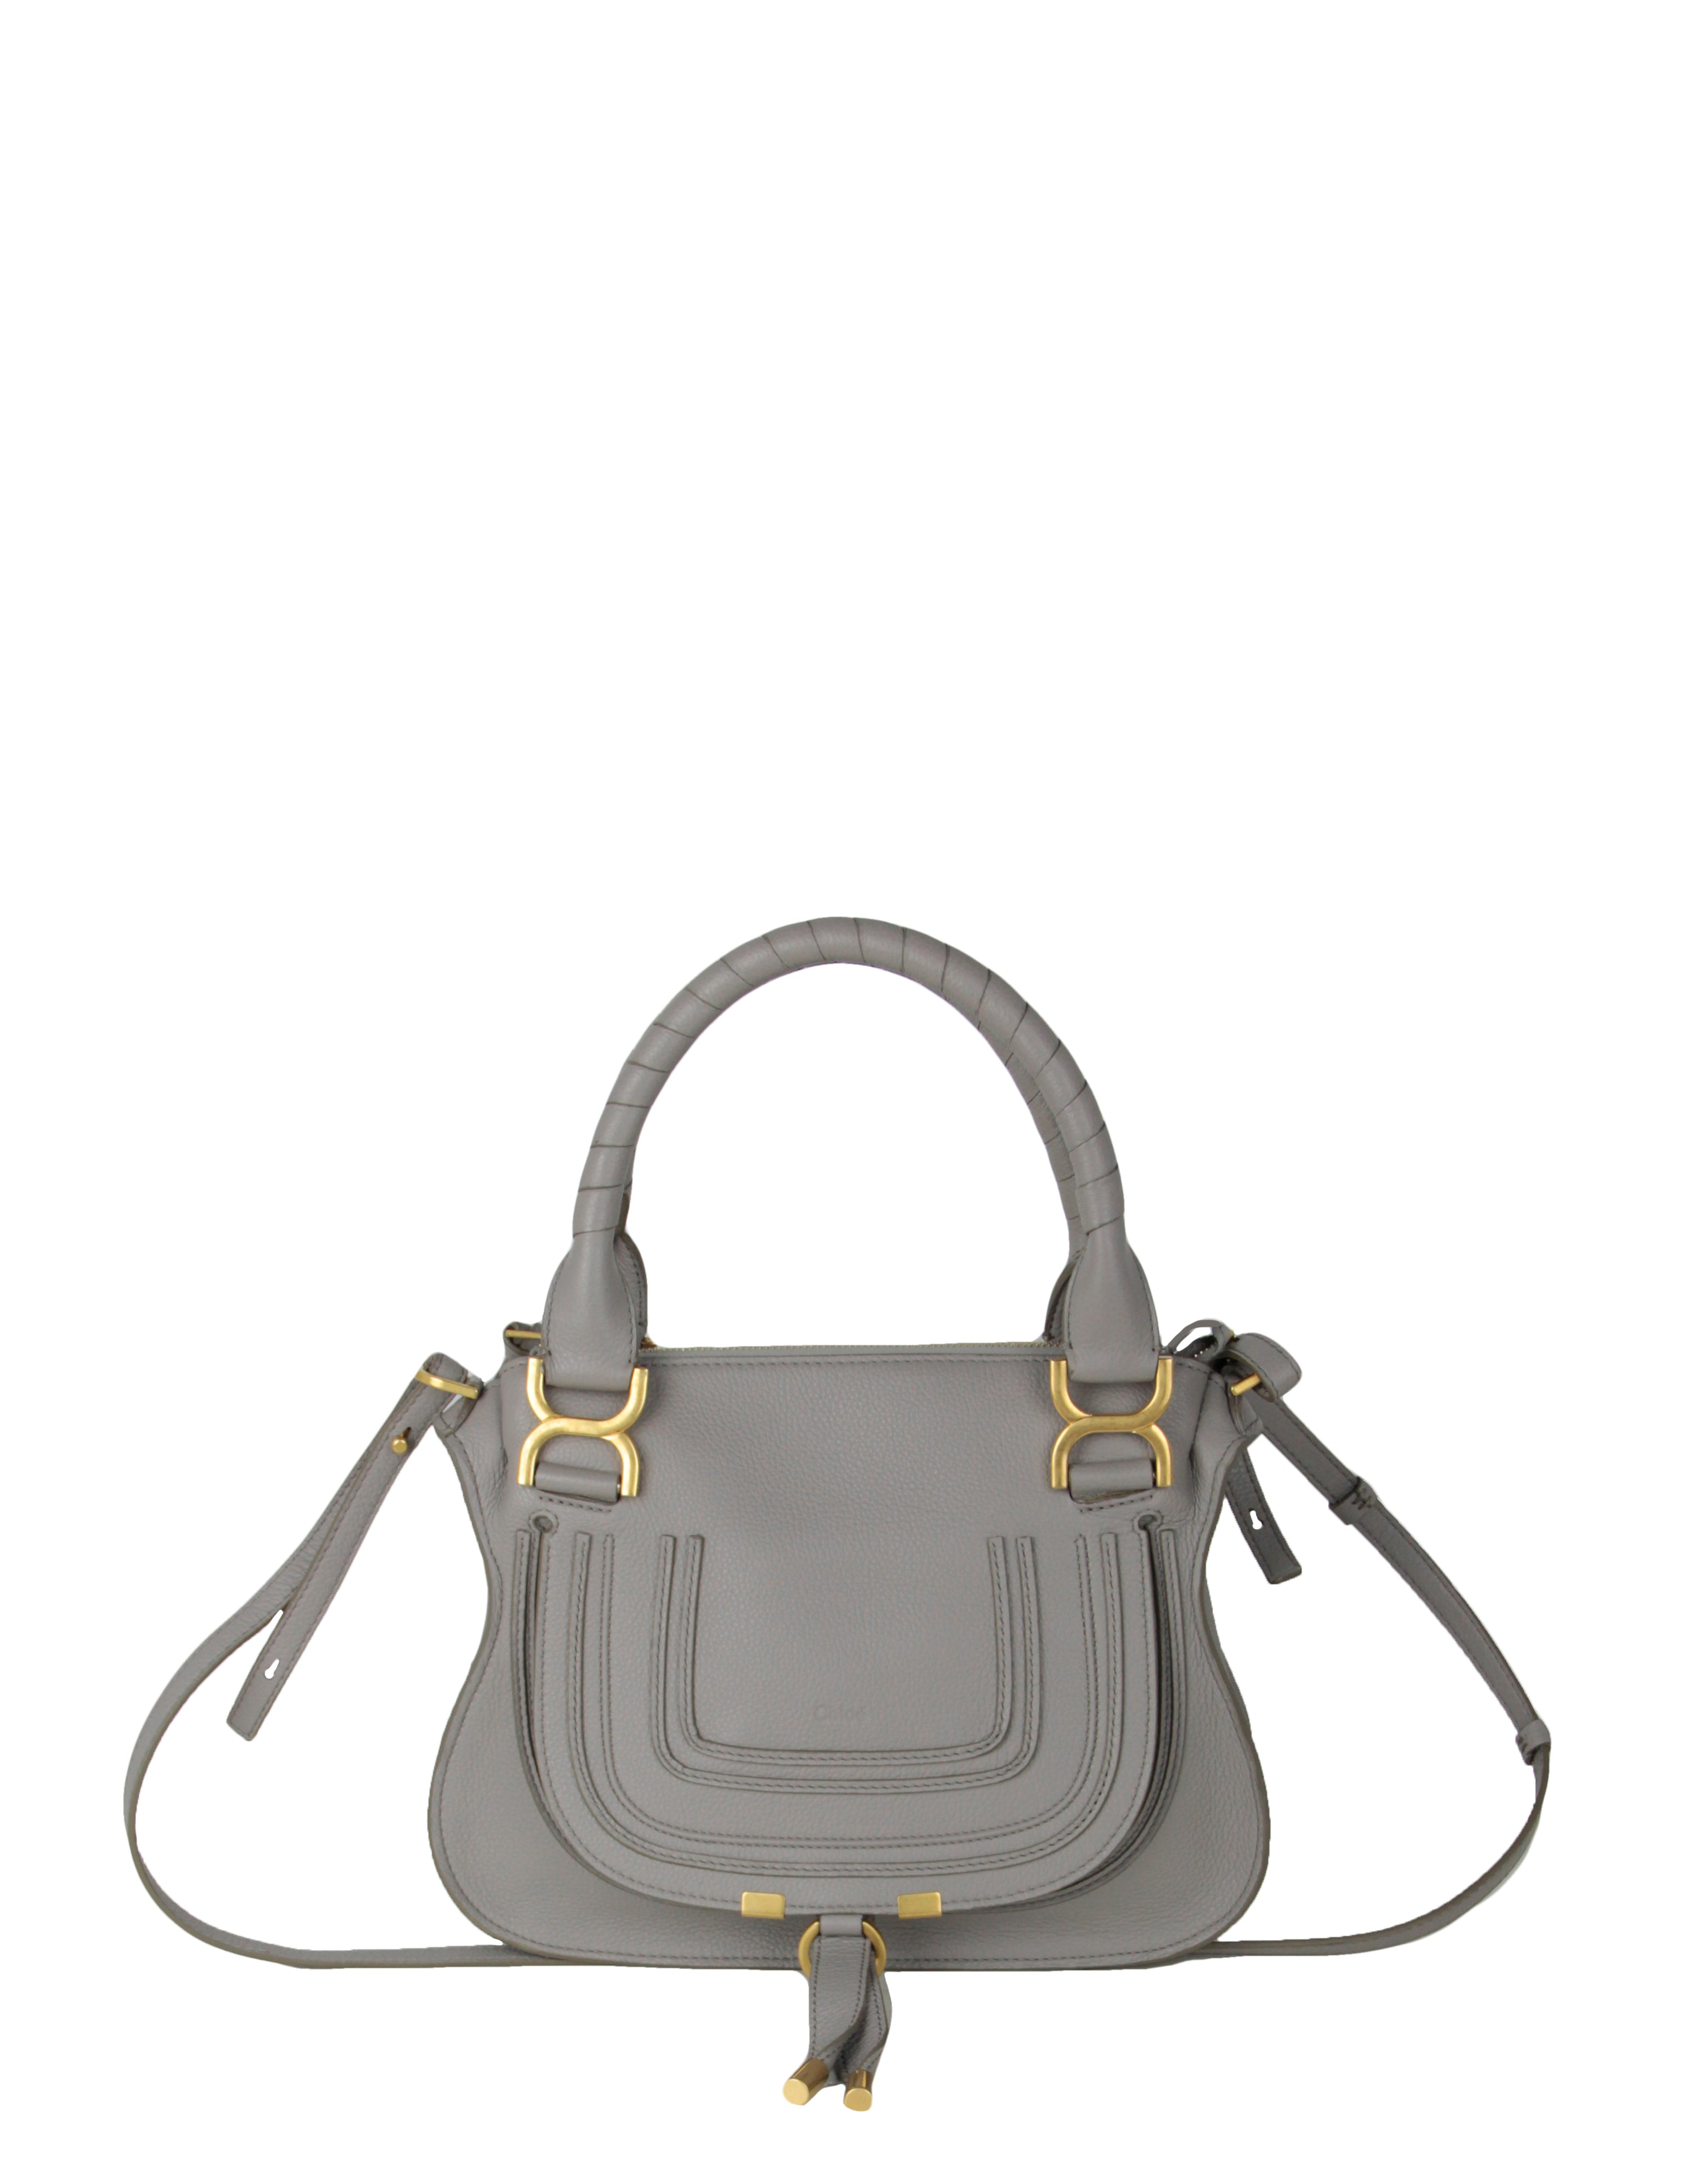 Chloe Cashmere Grey Leather Small Marcie Satchel Bag